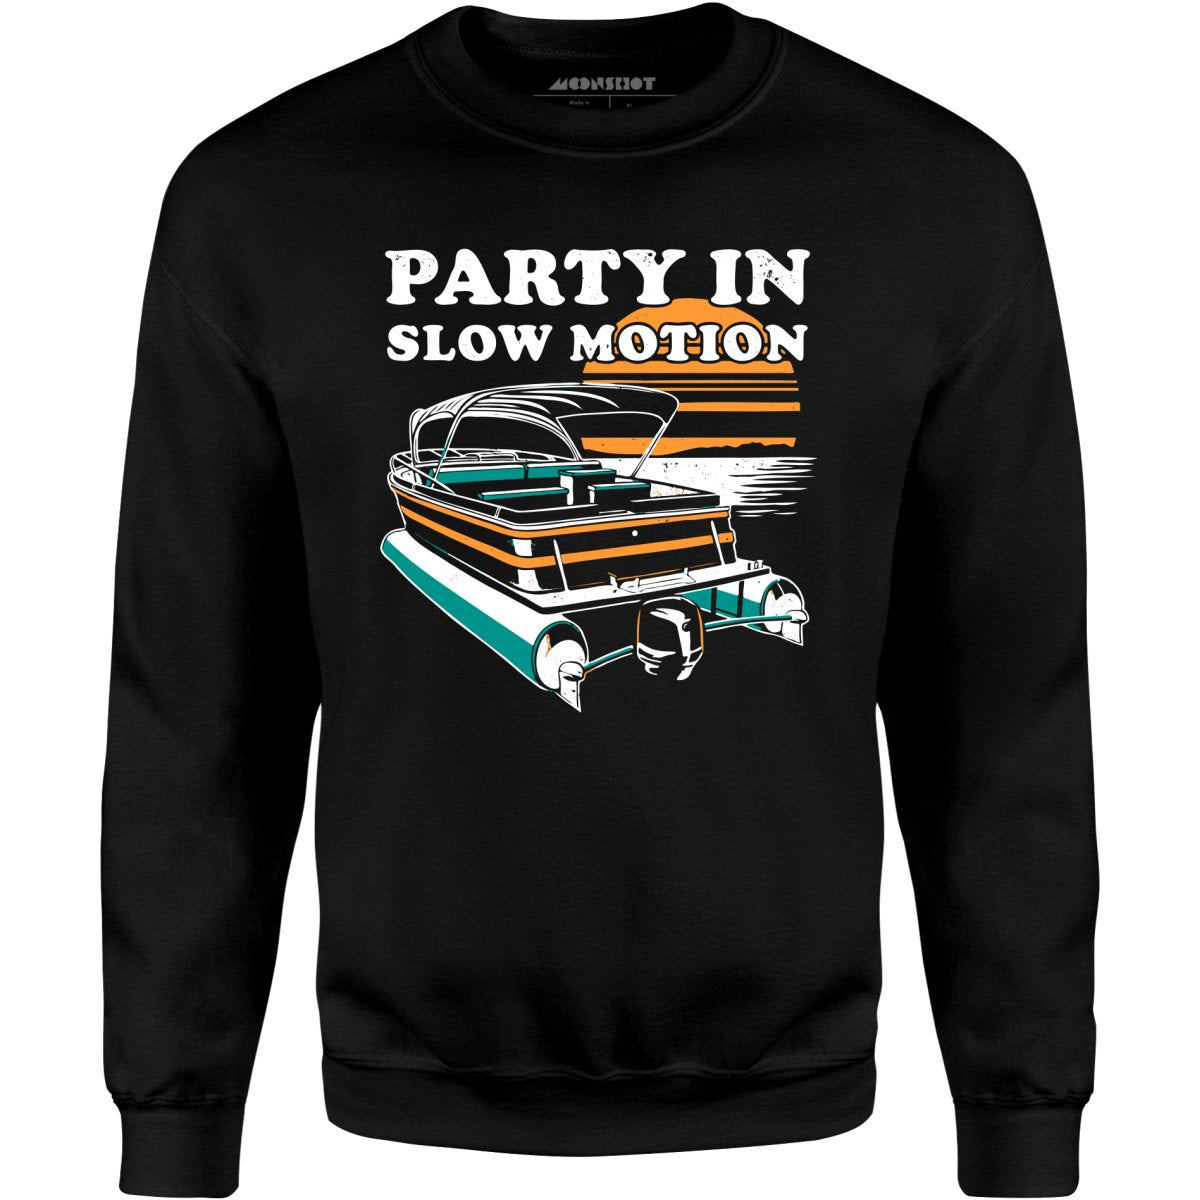 Party in Slow Motion - Unisex Sweatshirt